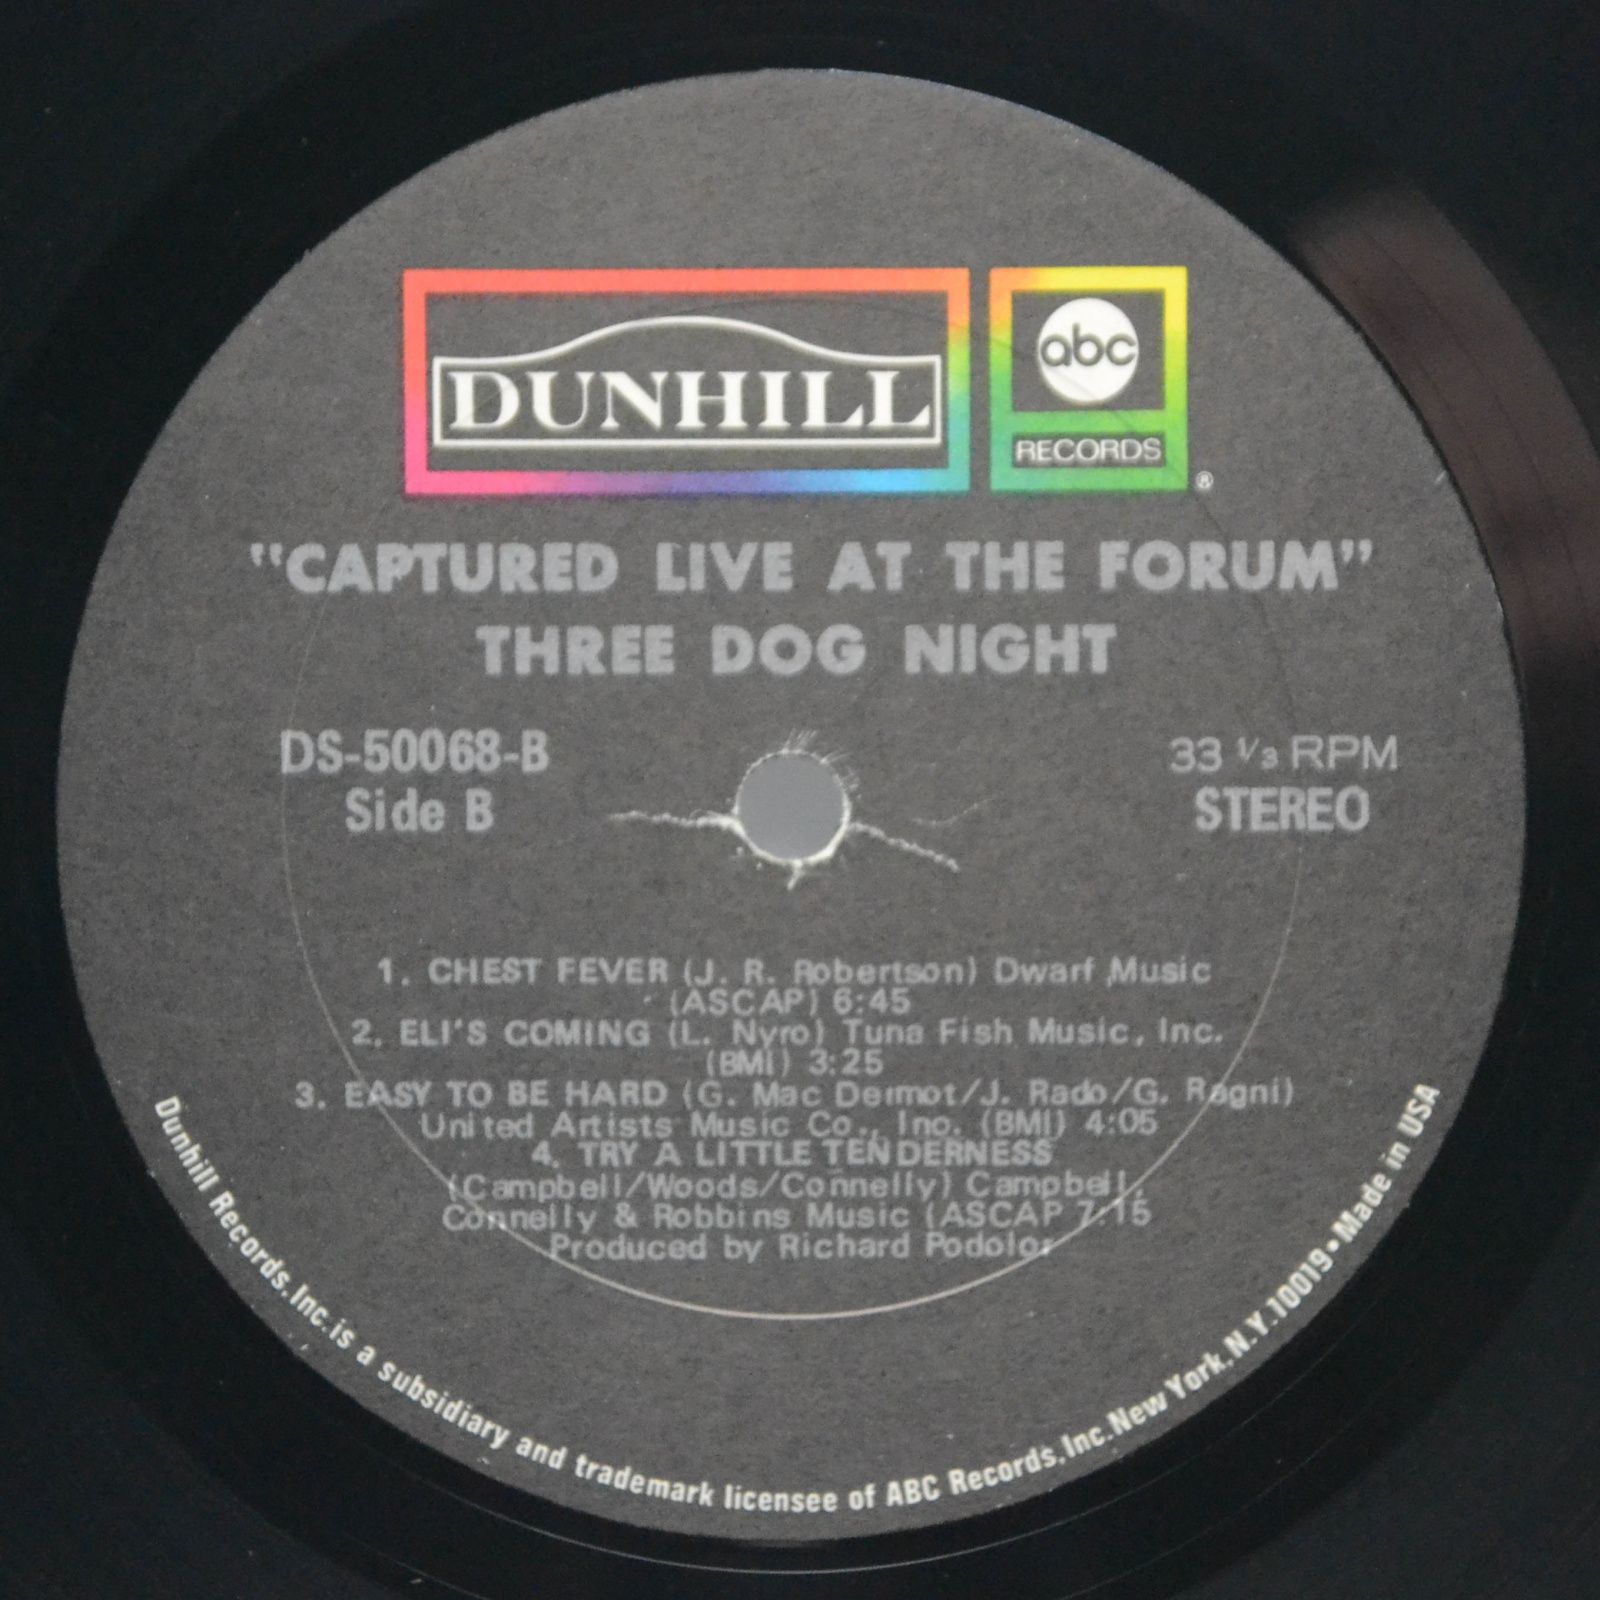 Three Dog Night — Captured Live At The Forum (1-st, USA), 1969